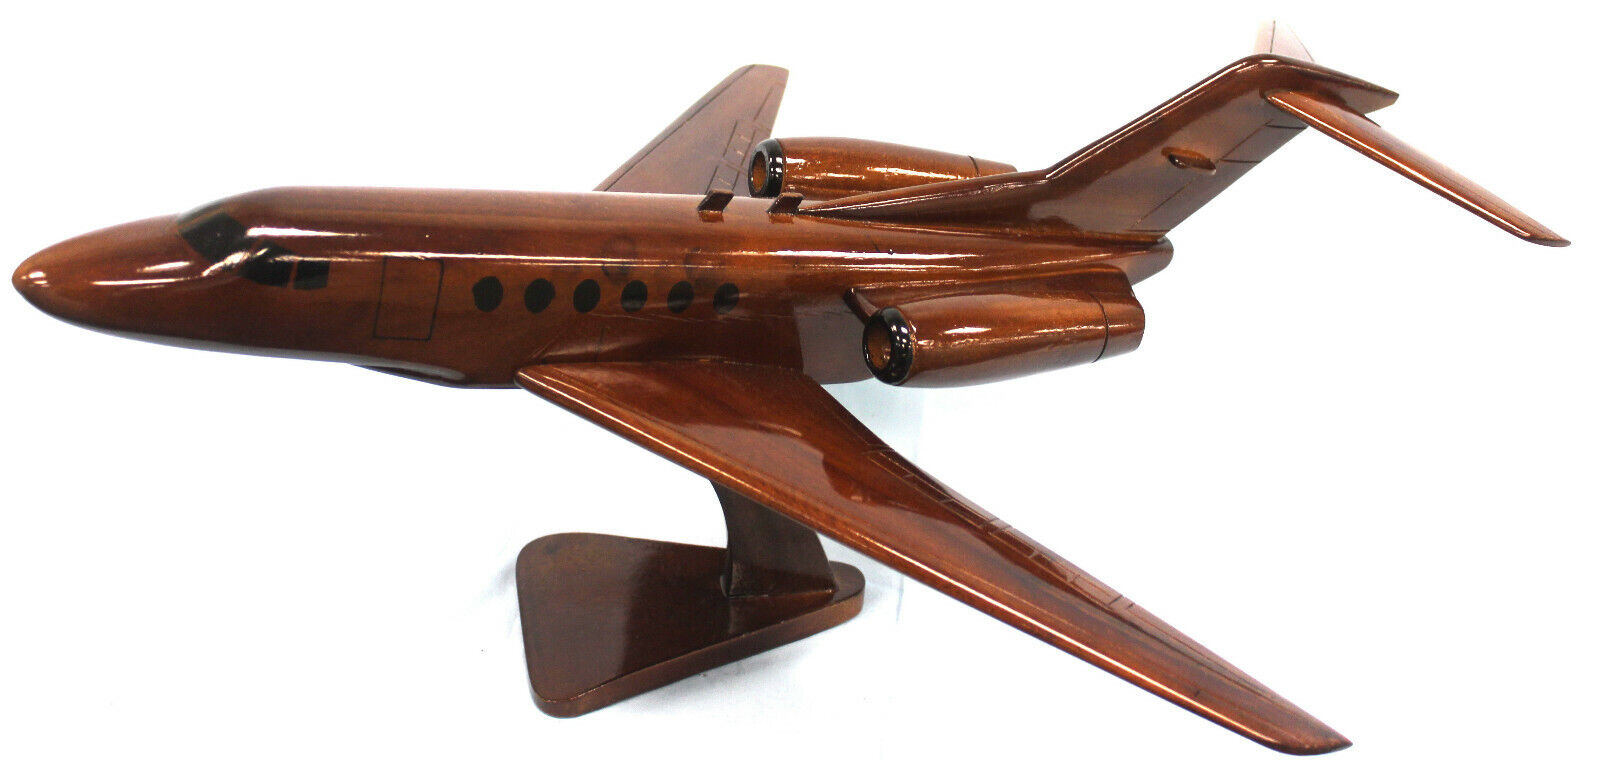 Citation X Citation 10 Wooden Model Airplane Mahogany-W- Personalized Plaque